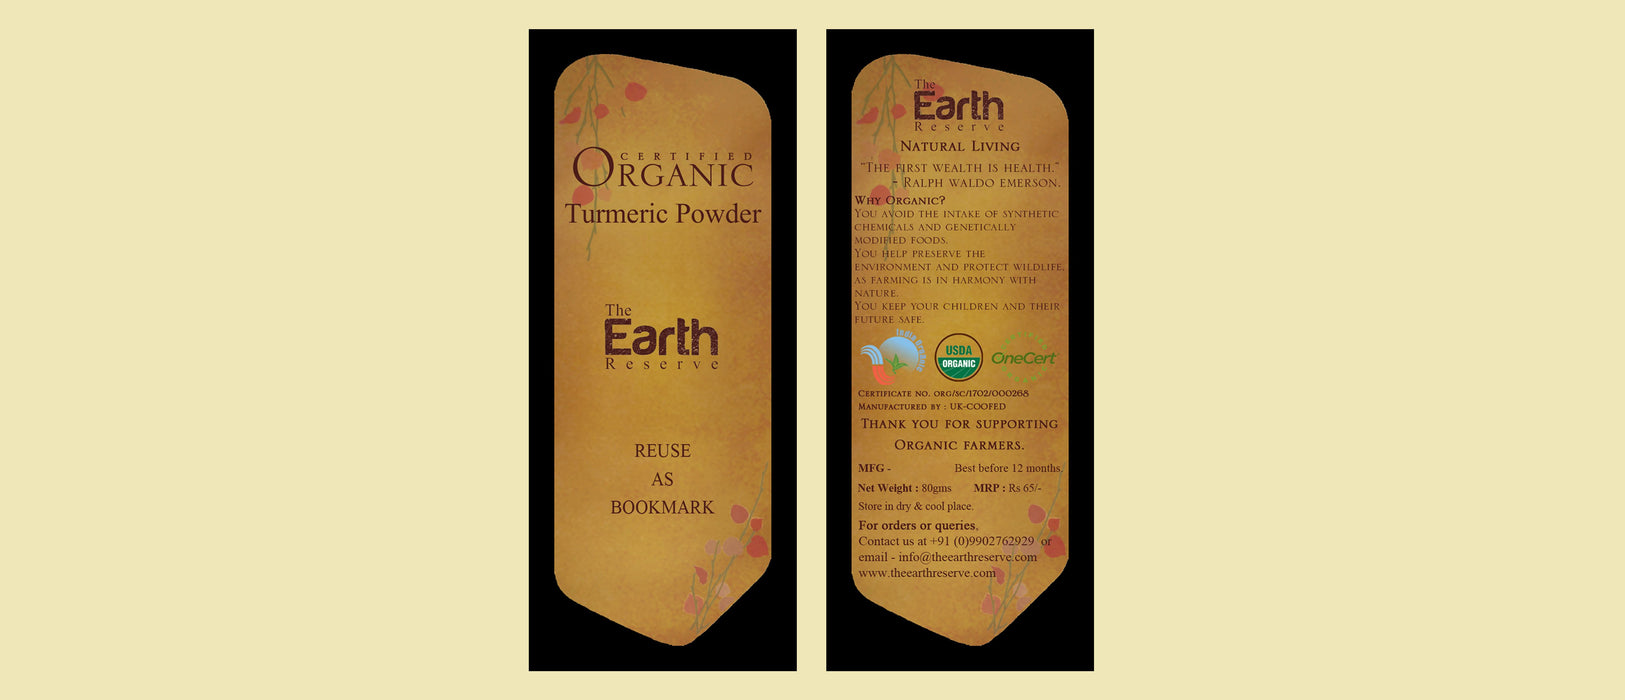 Buy Organic Turmeric Powder - Local Option